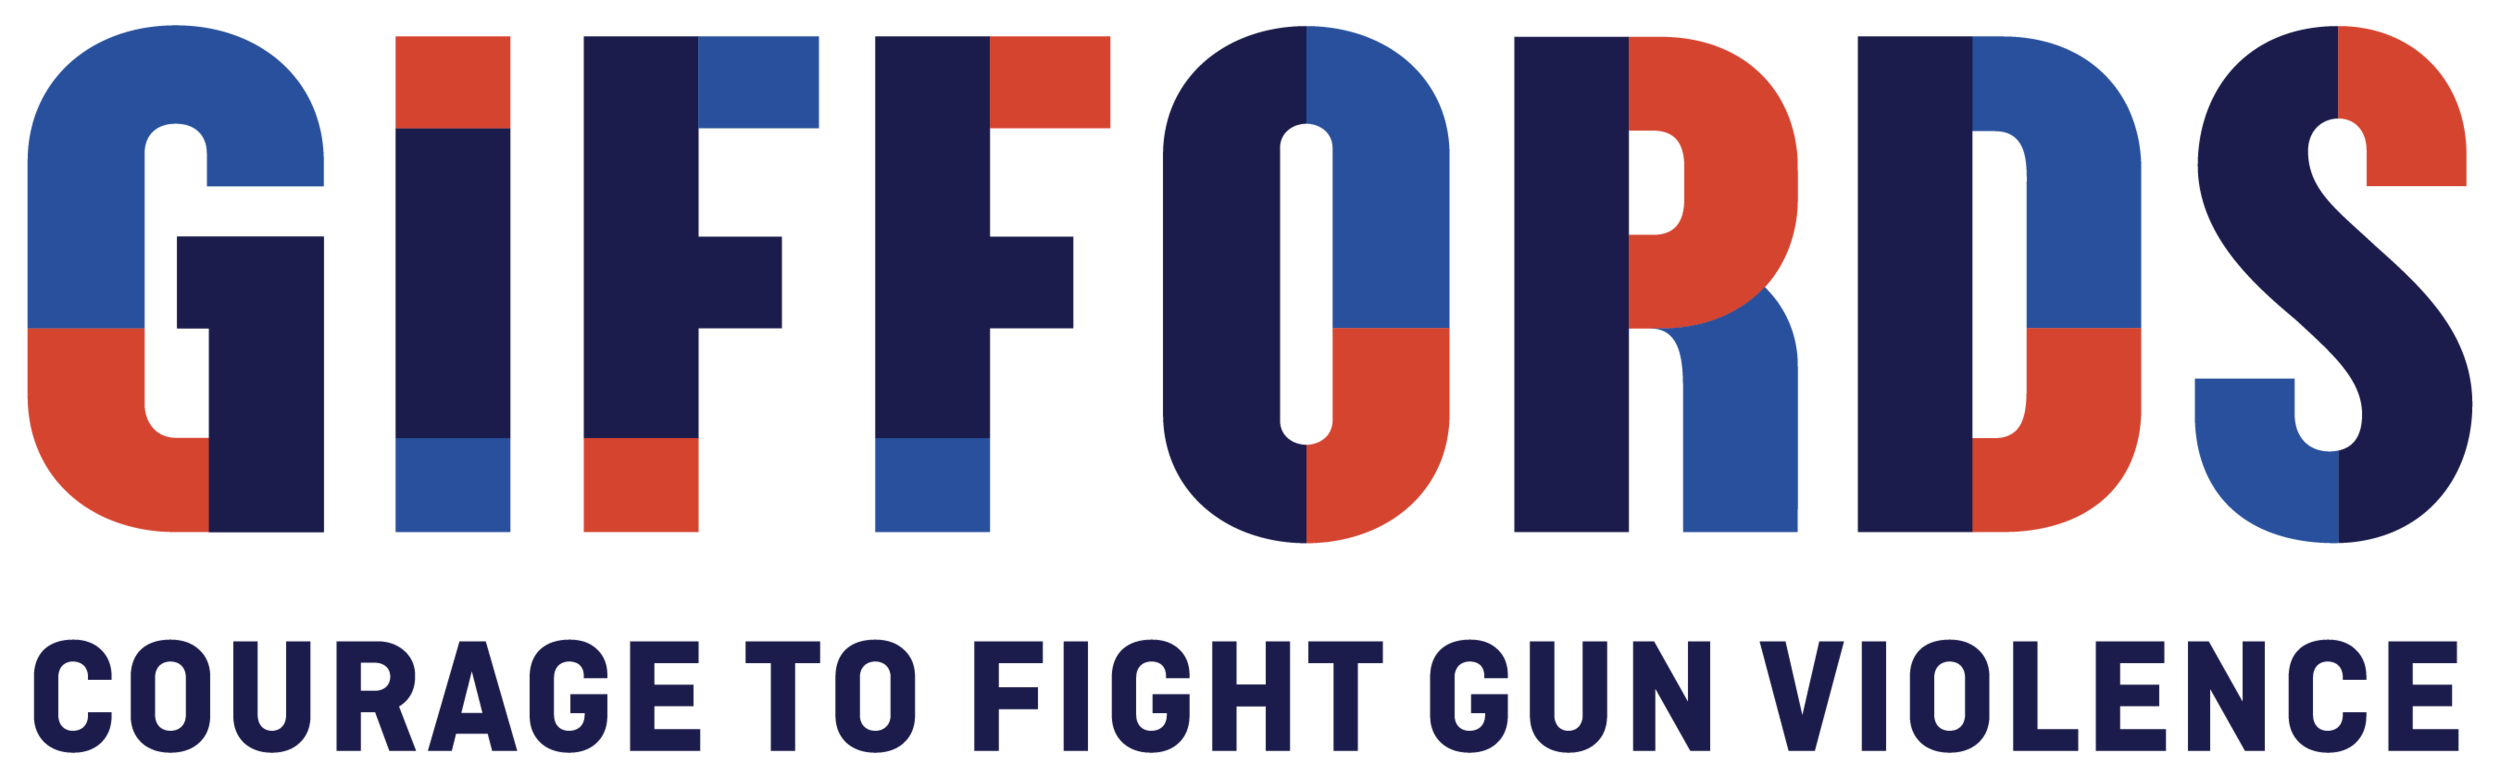 Giffords: Courage to Fight Gun Violence logo